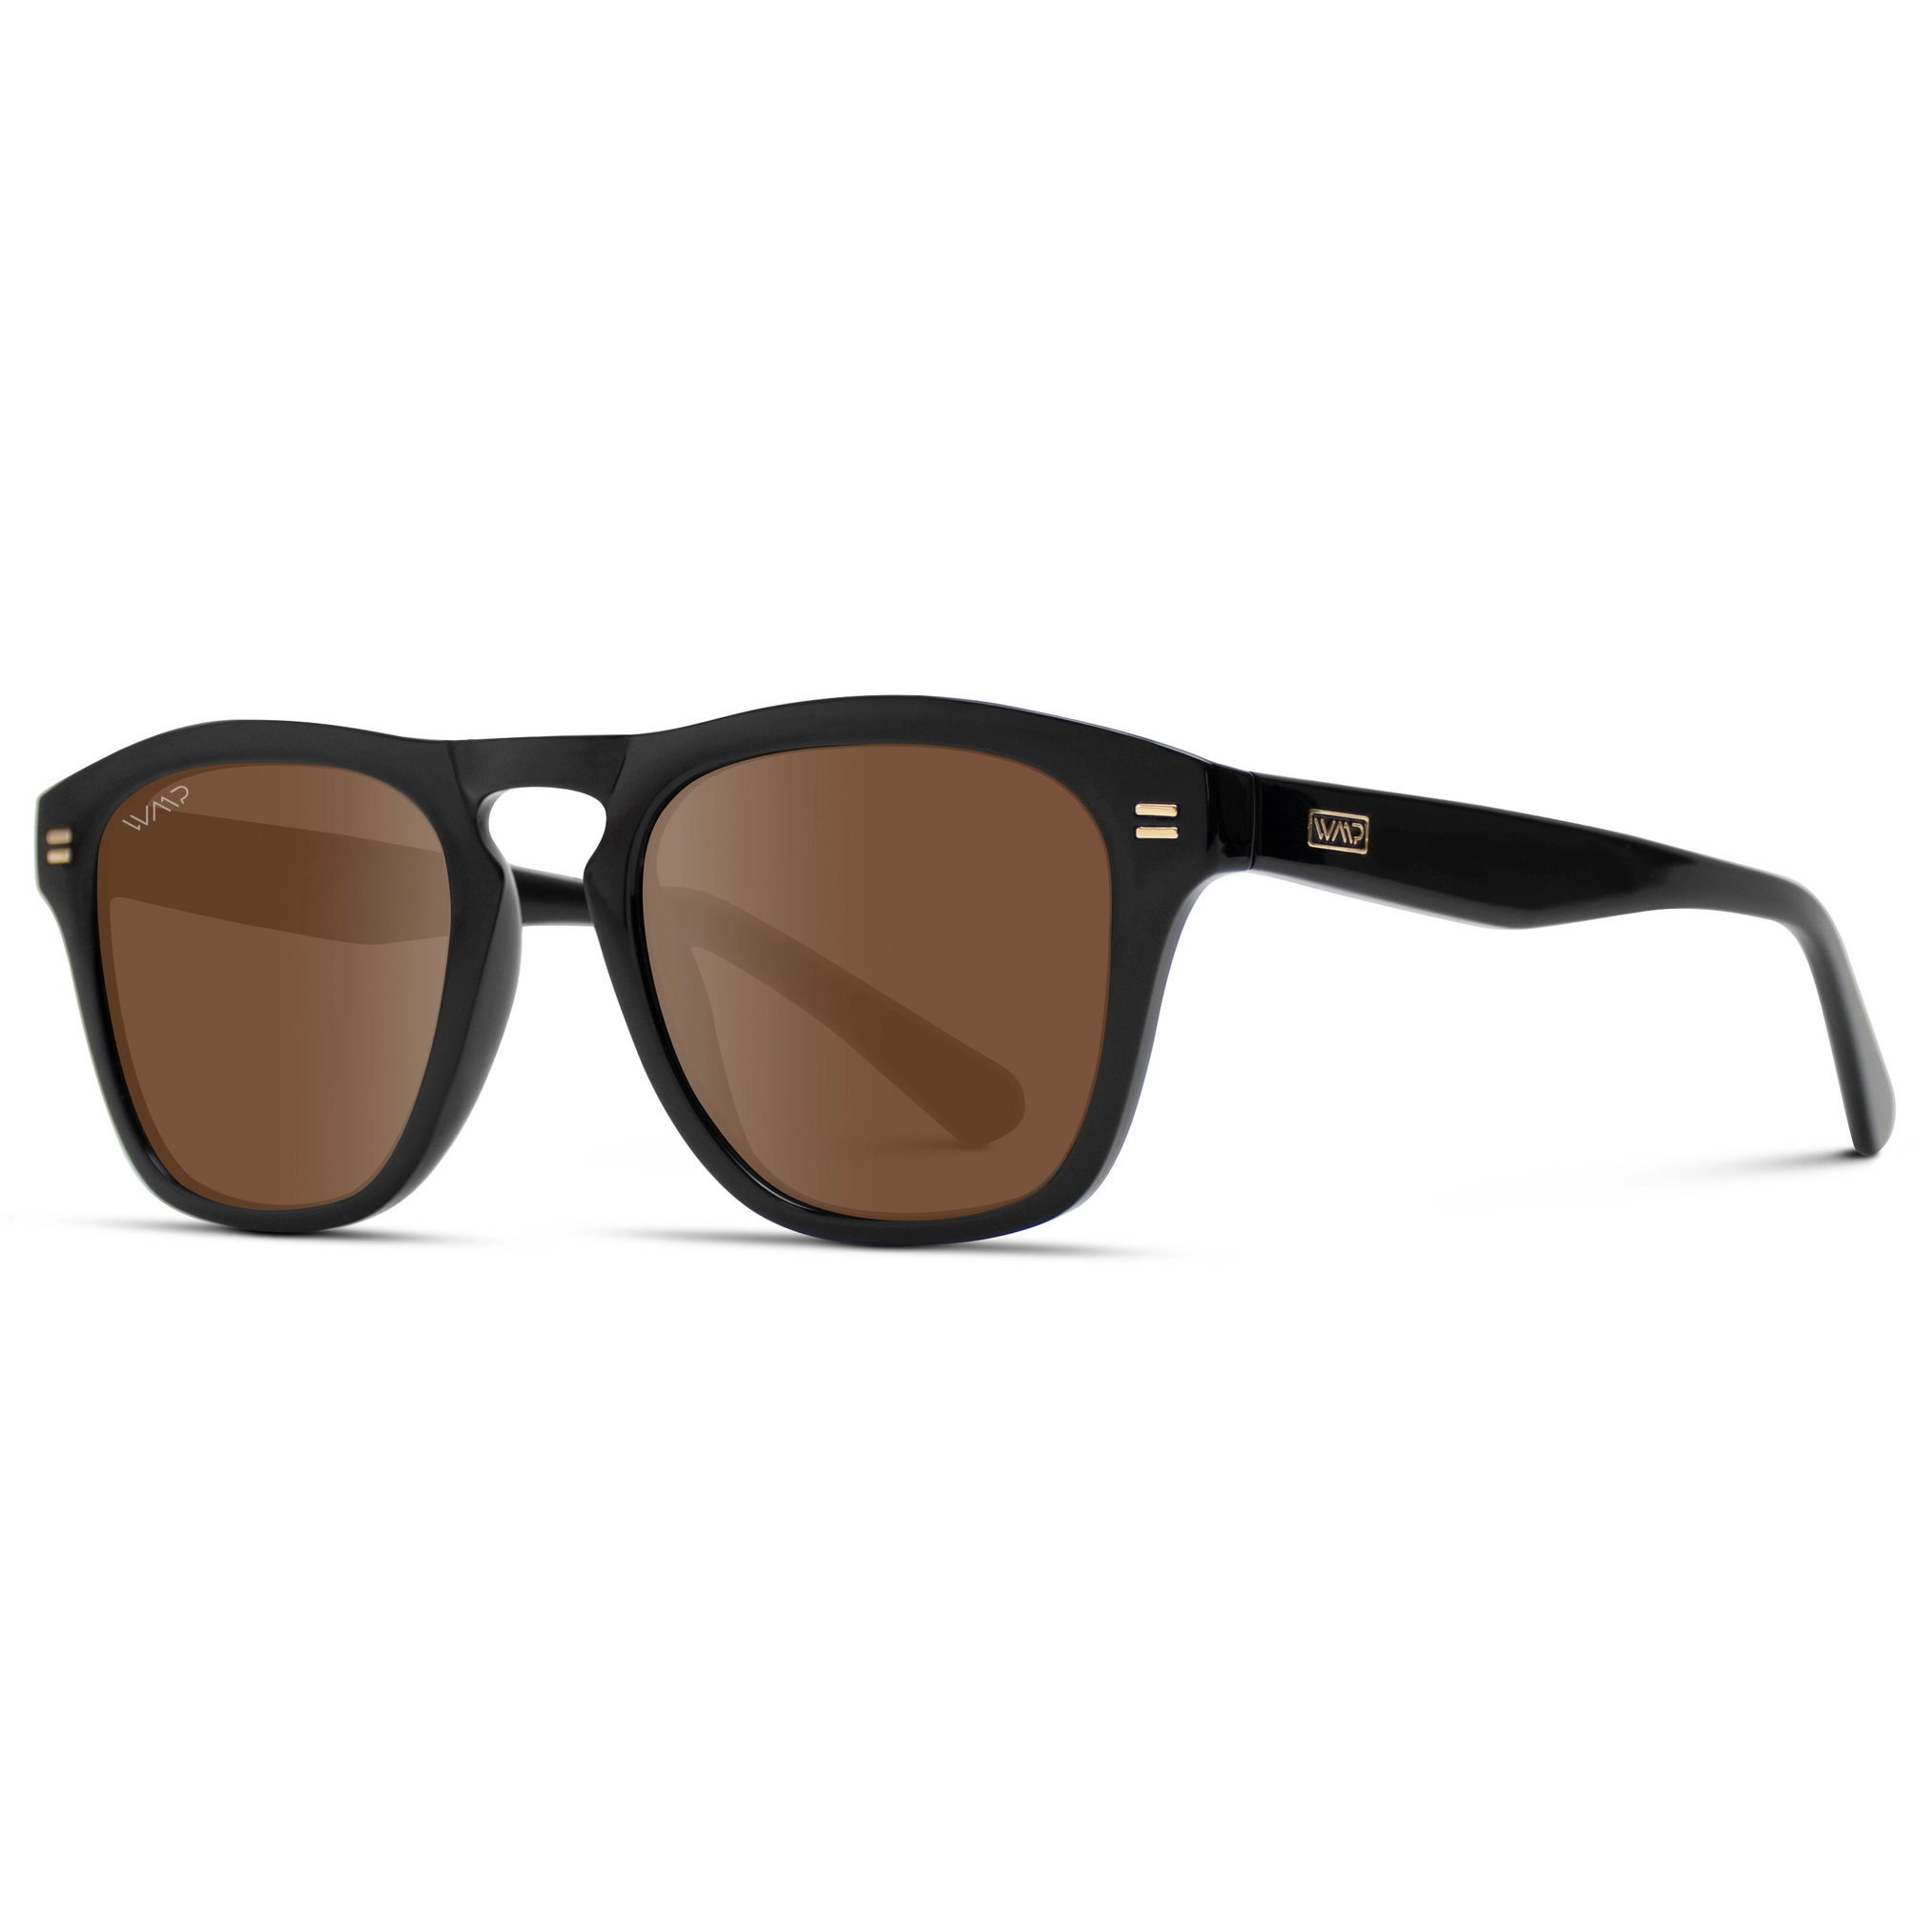 Dash Sunglasses in Gloss Black/Brown